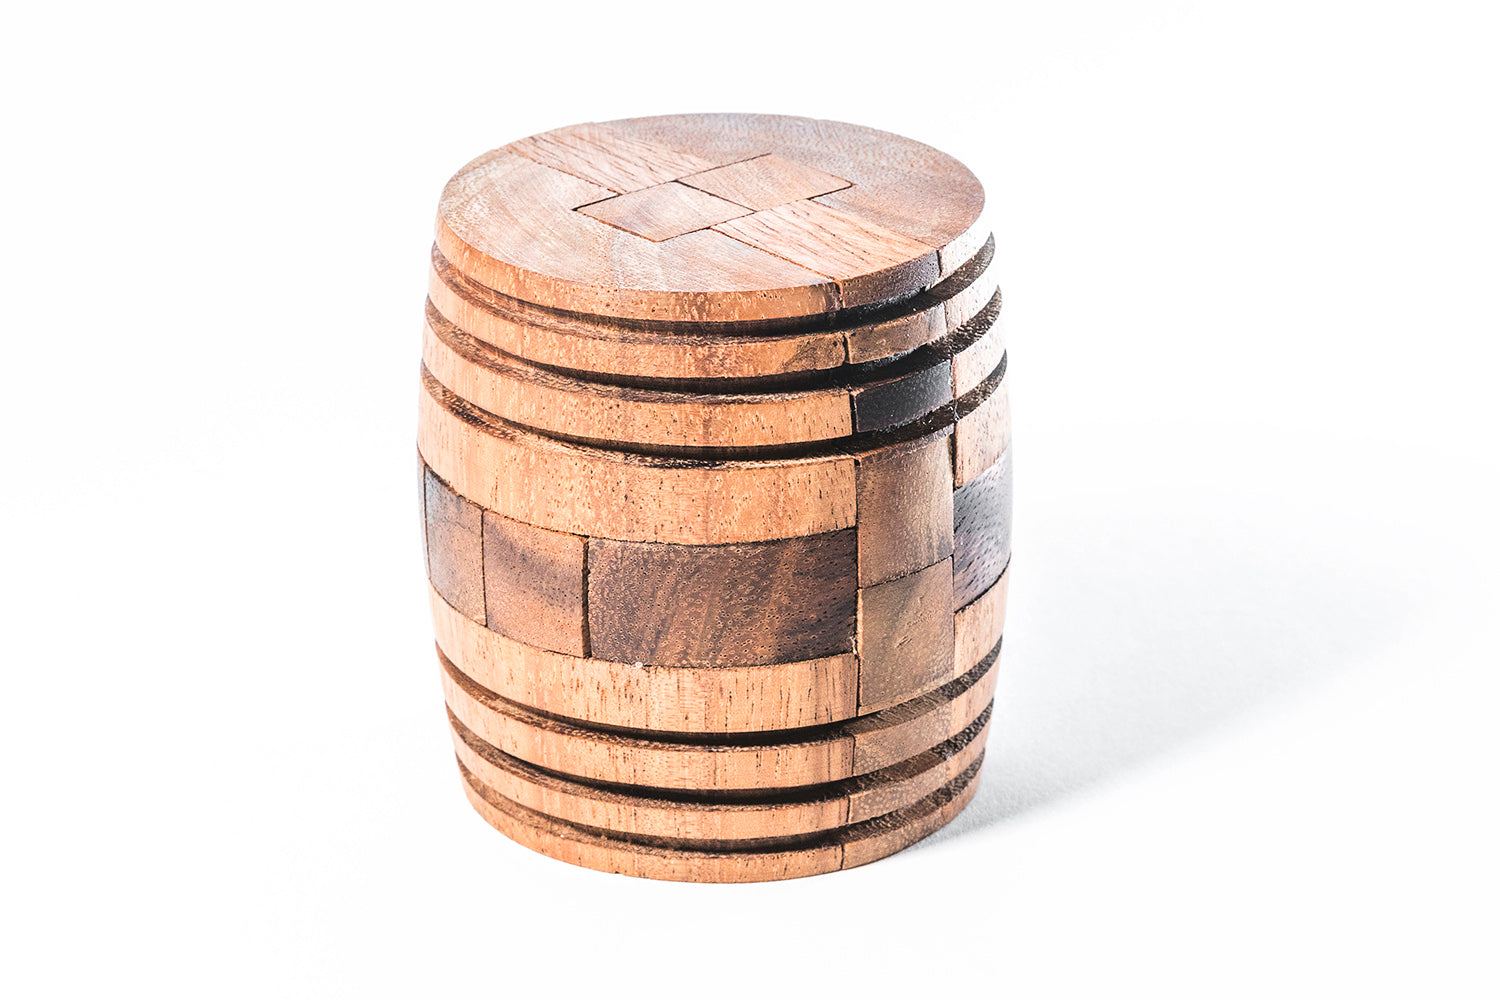 Japanese Barrel Puzzle - Wooden Interlocking Brain Teaser Puzzle